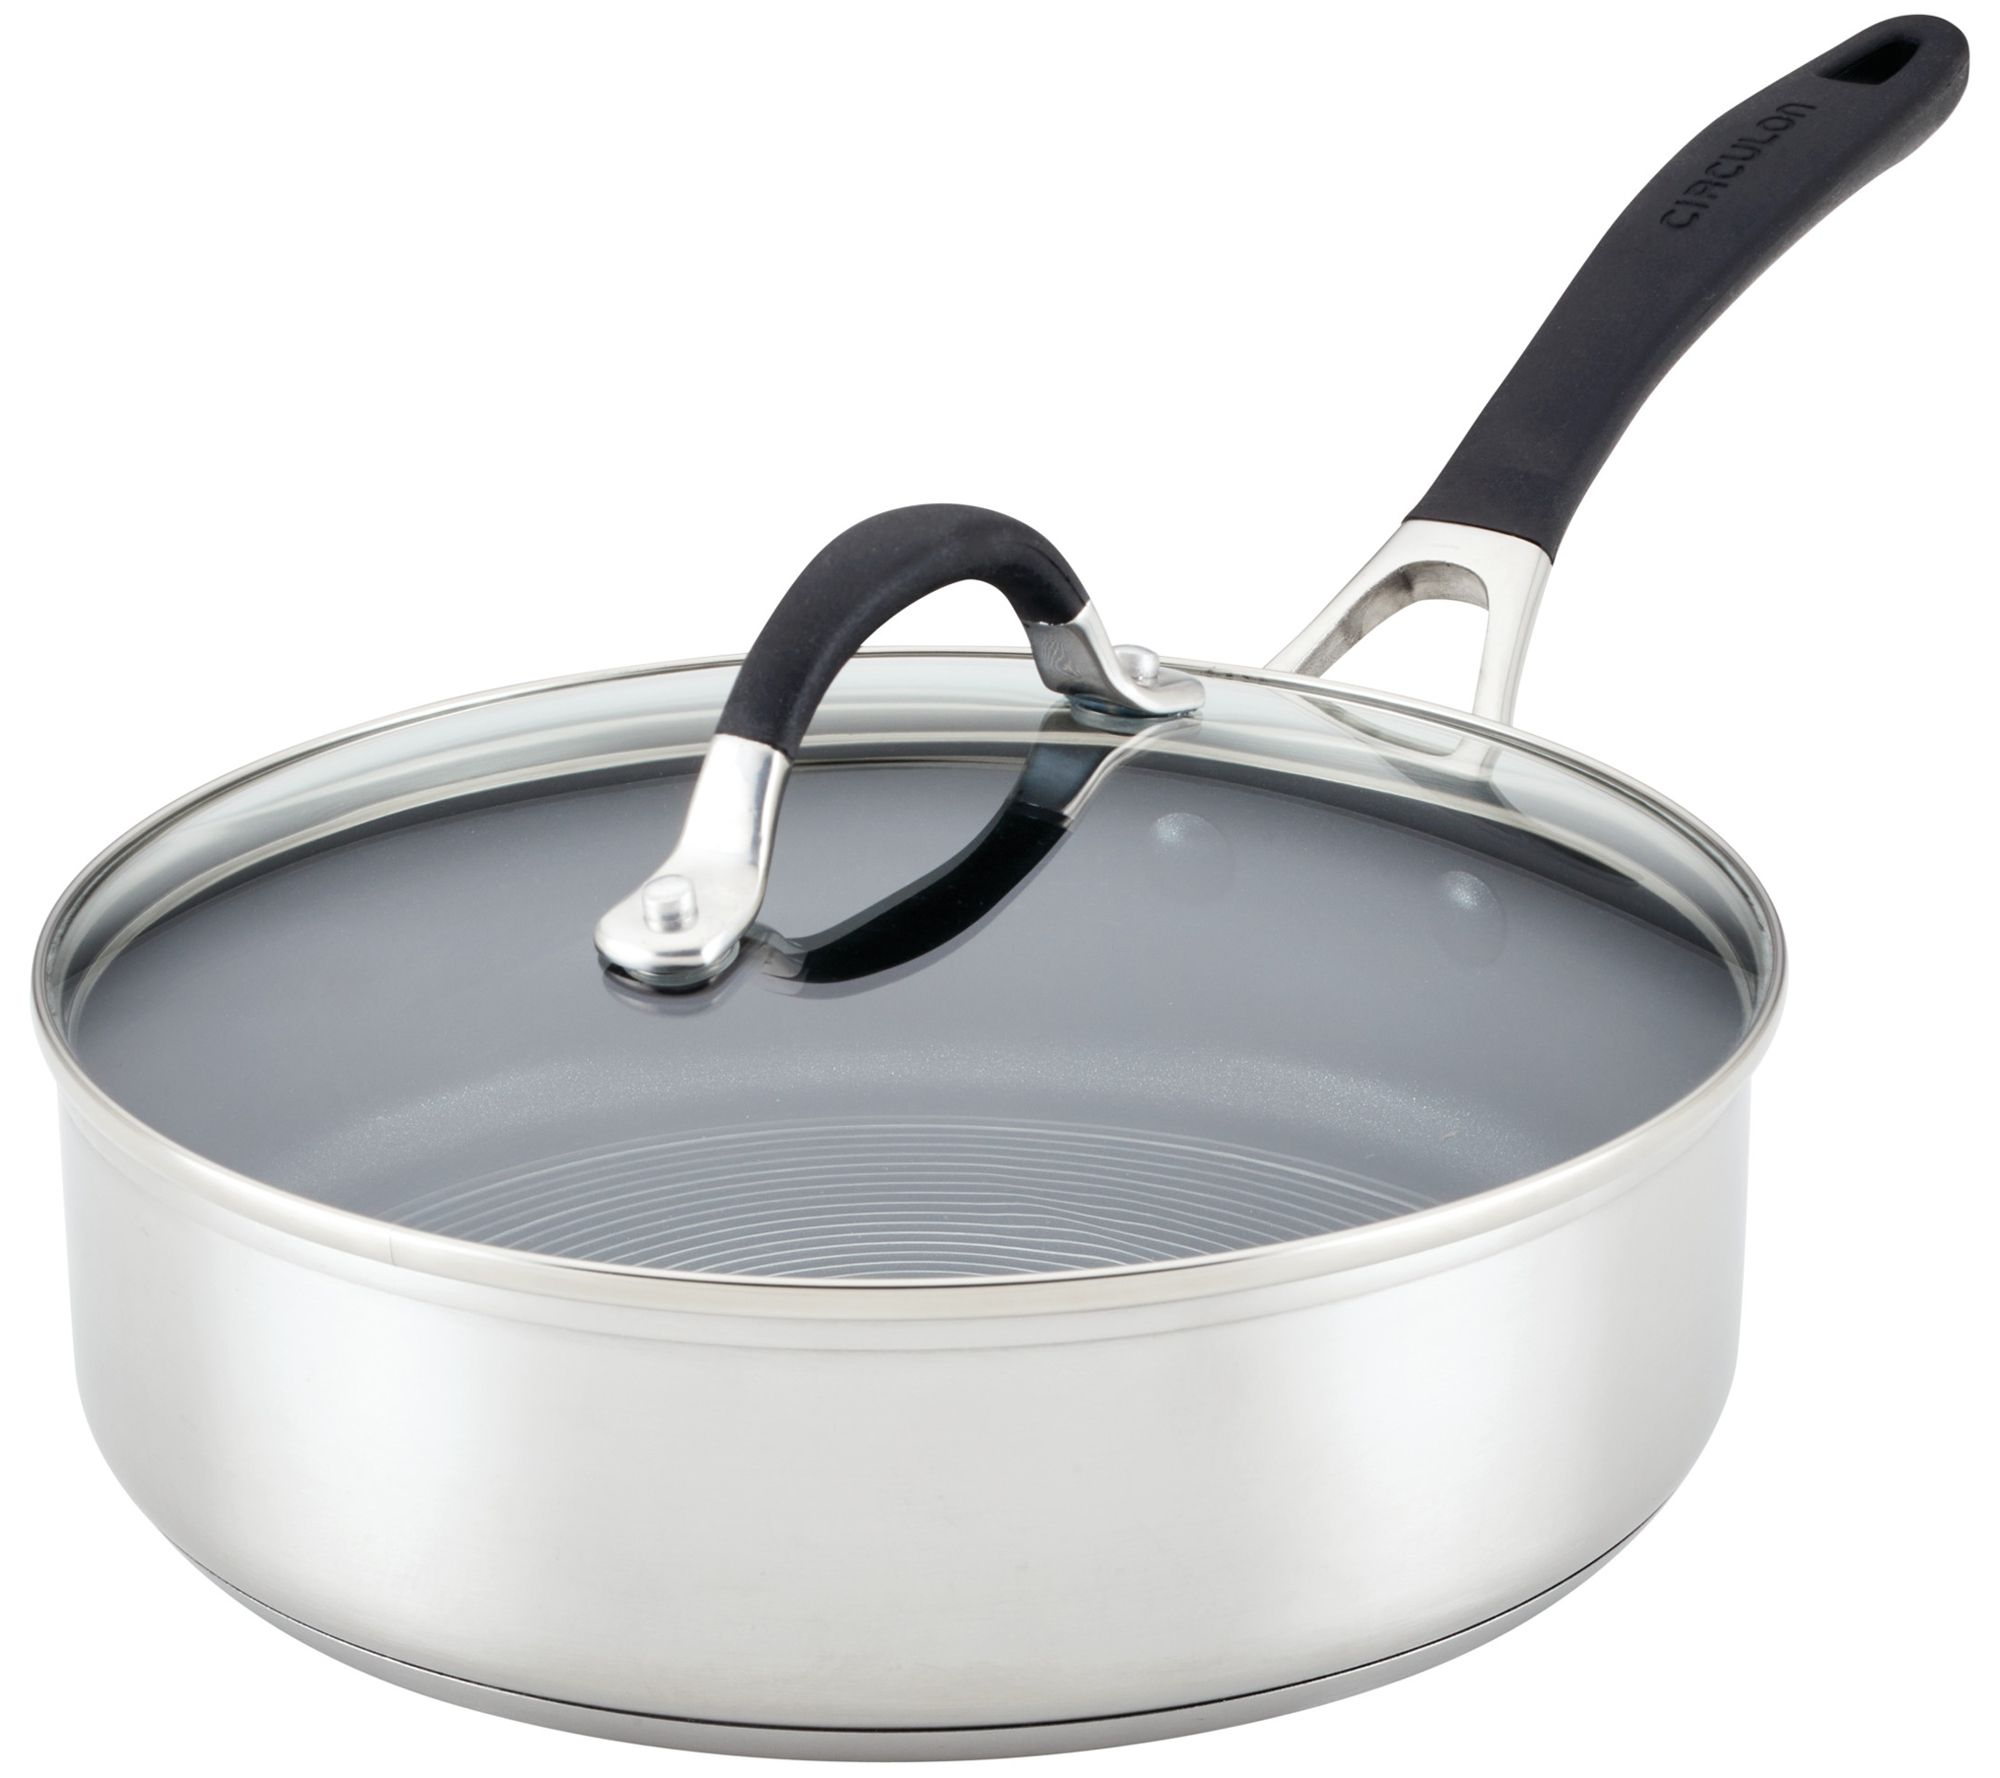 Bergner bergner - prochef cookware - pots and pans set nonstick